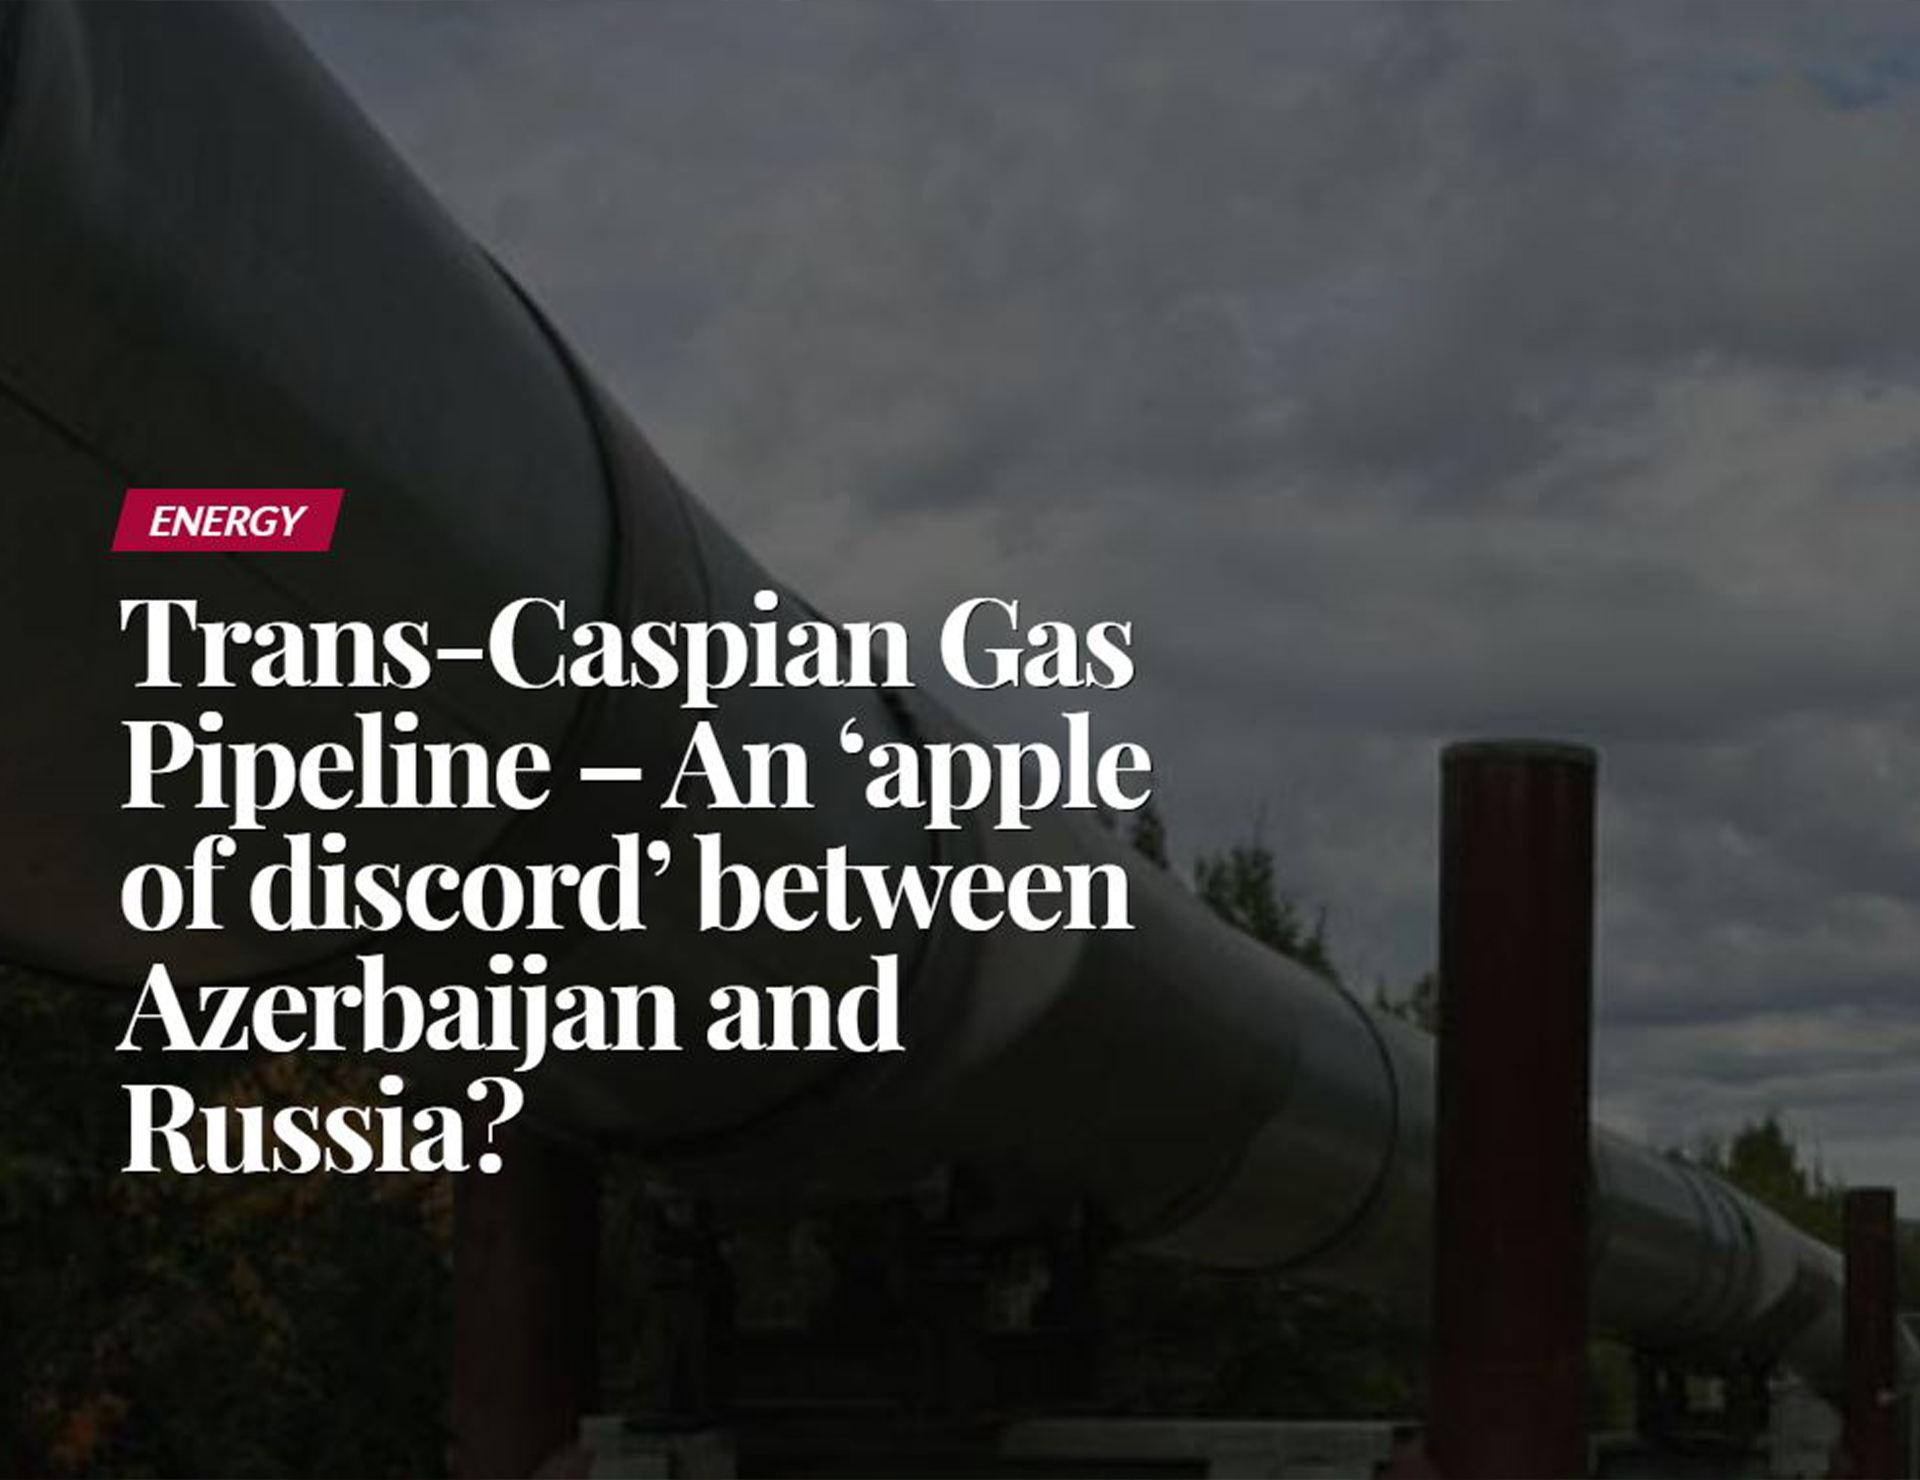 Trans-Caspian Gas Pipeline – An ‘apple of discord’ between Azerbaijan and Russia?